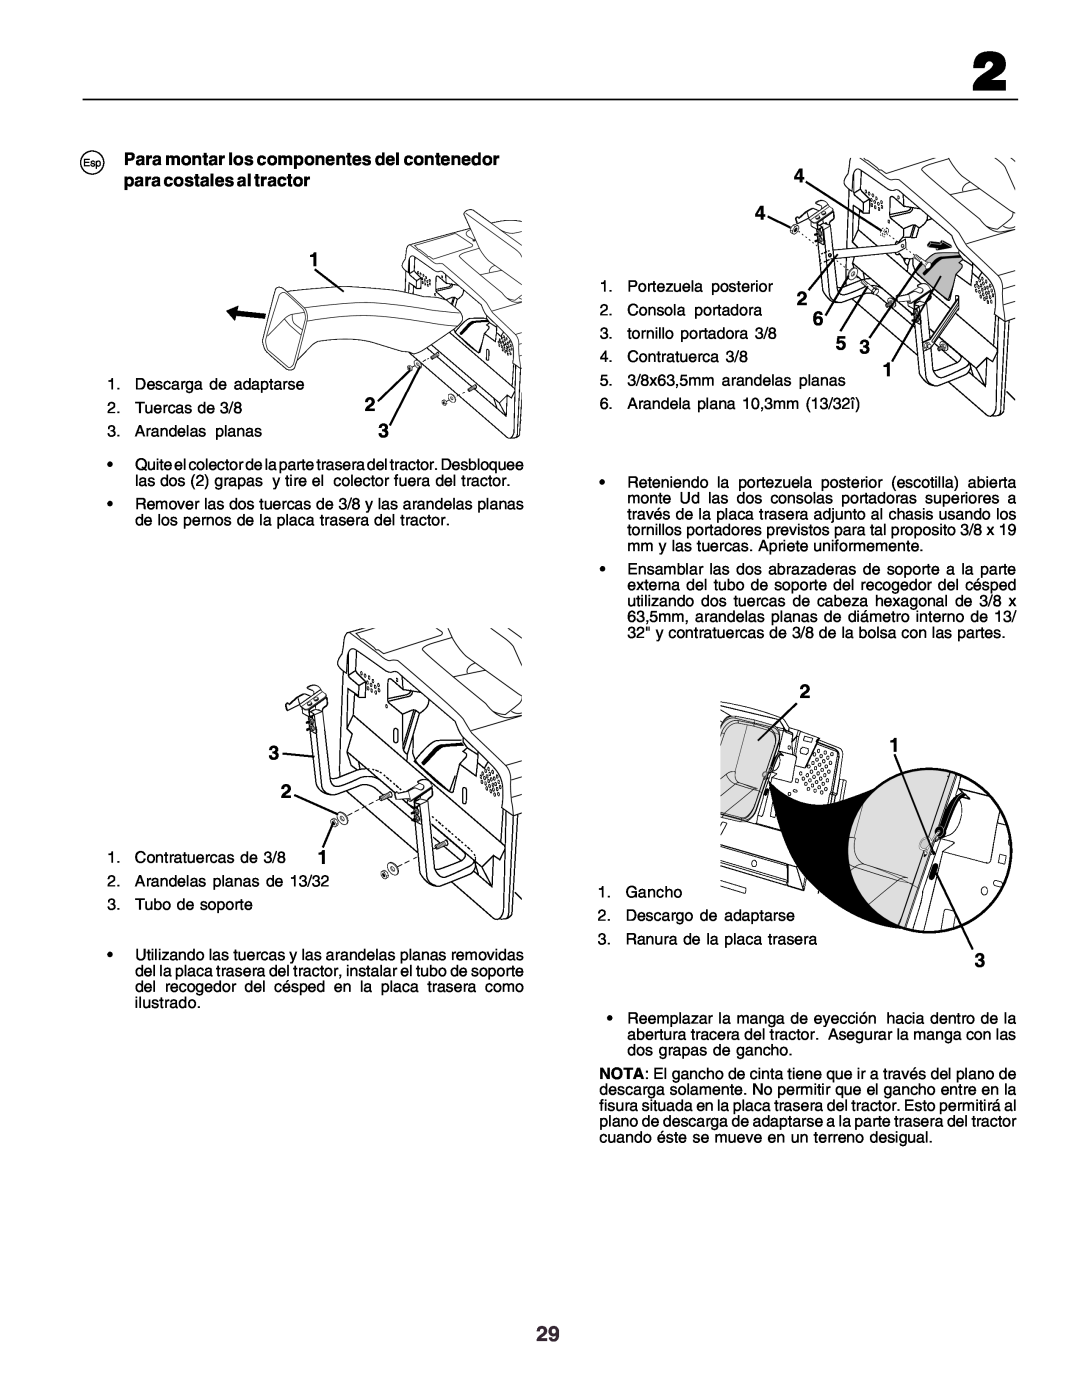 Husqvarna CT130 instruction manual Portezuela posterior 